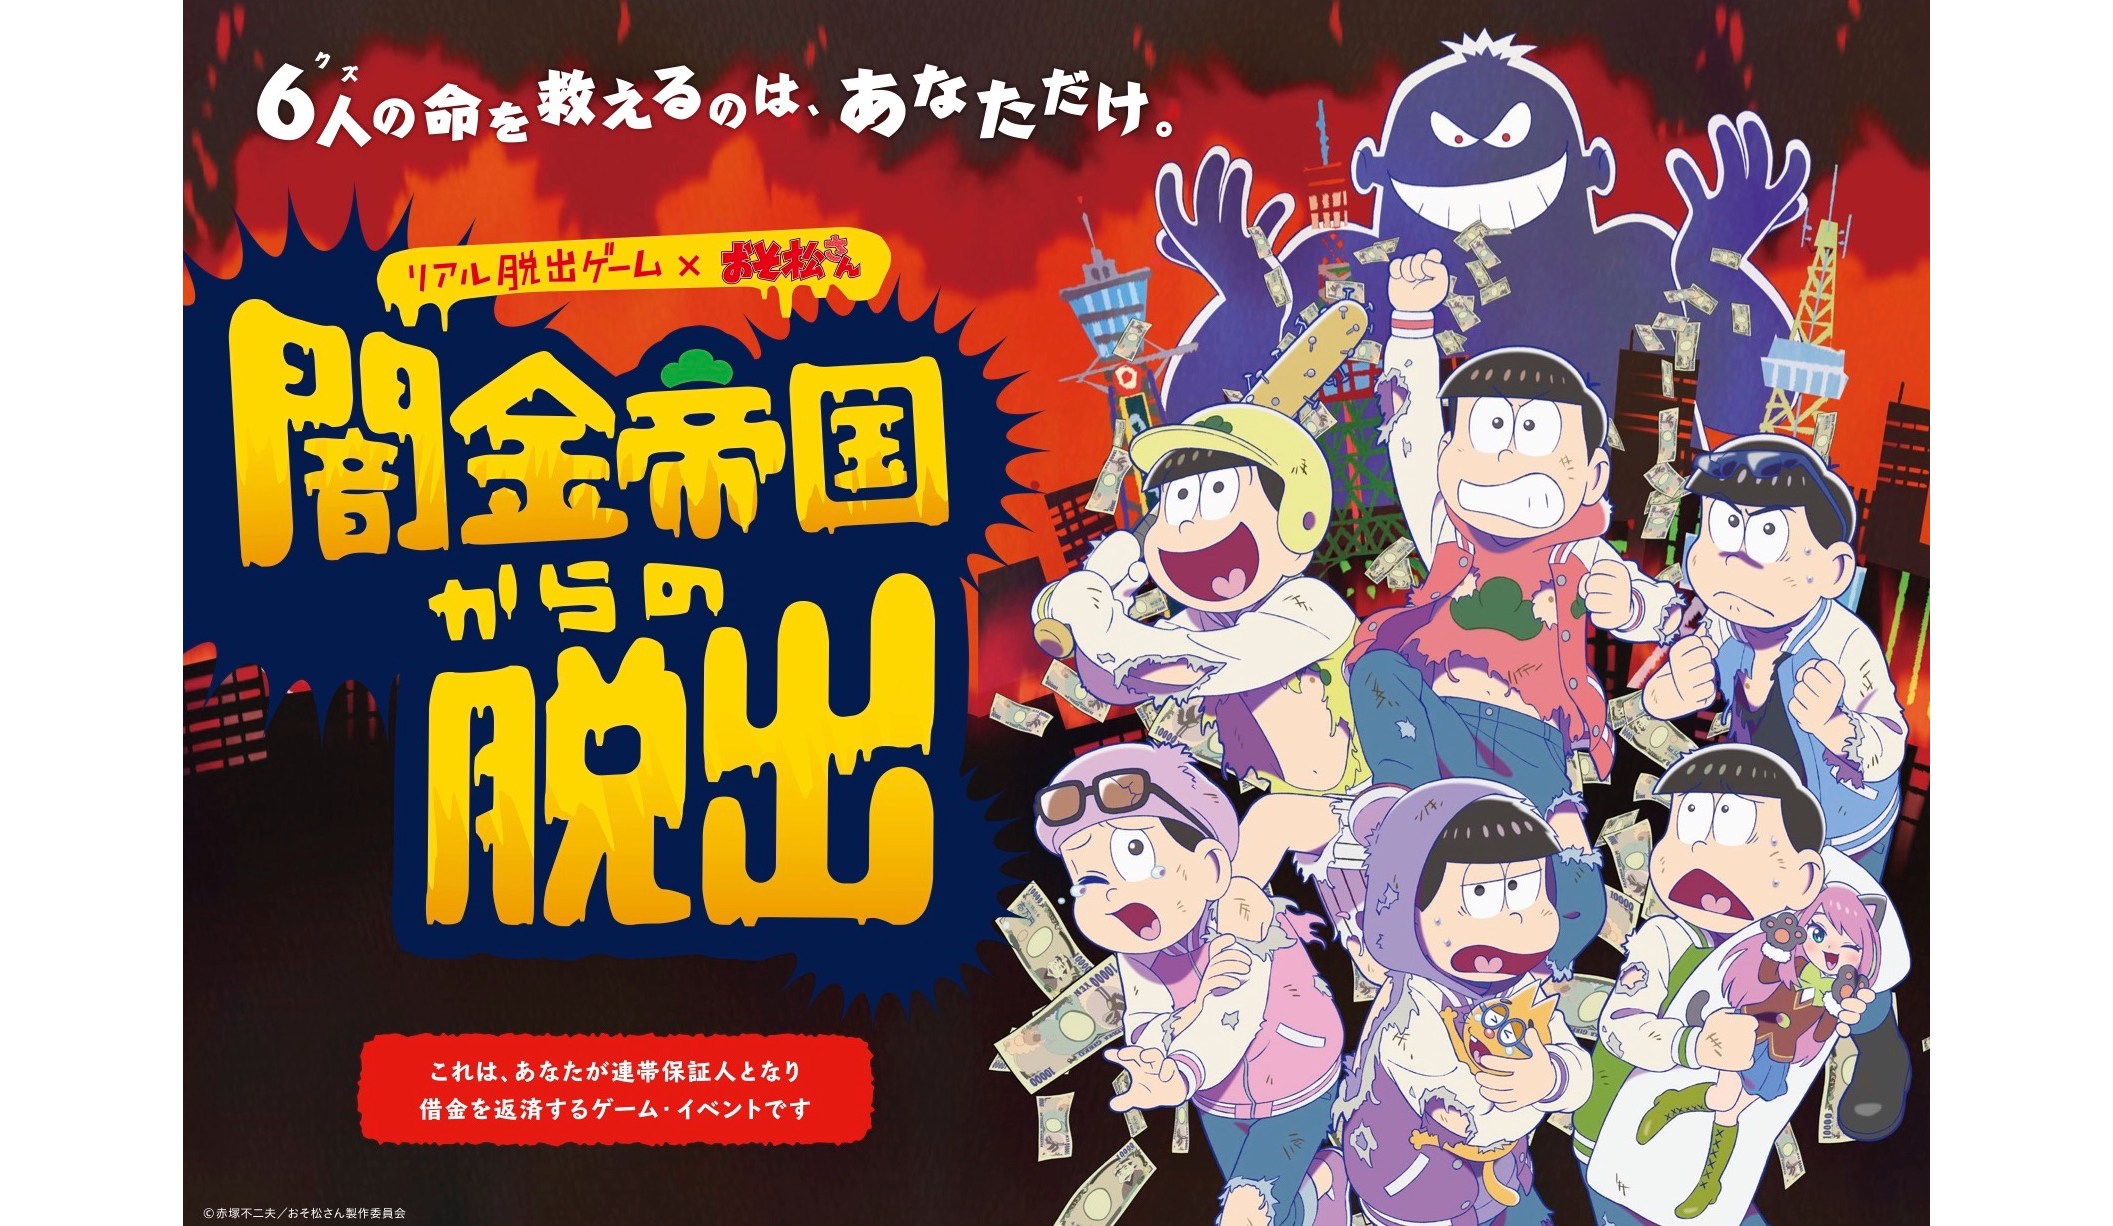 Demon Slayer: Kimetsu no Yaiba Anime Event Slashes Into Kyoto Until March, MOSHI MOSHI NIPPON